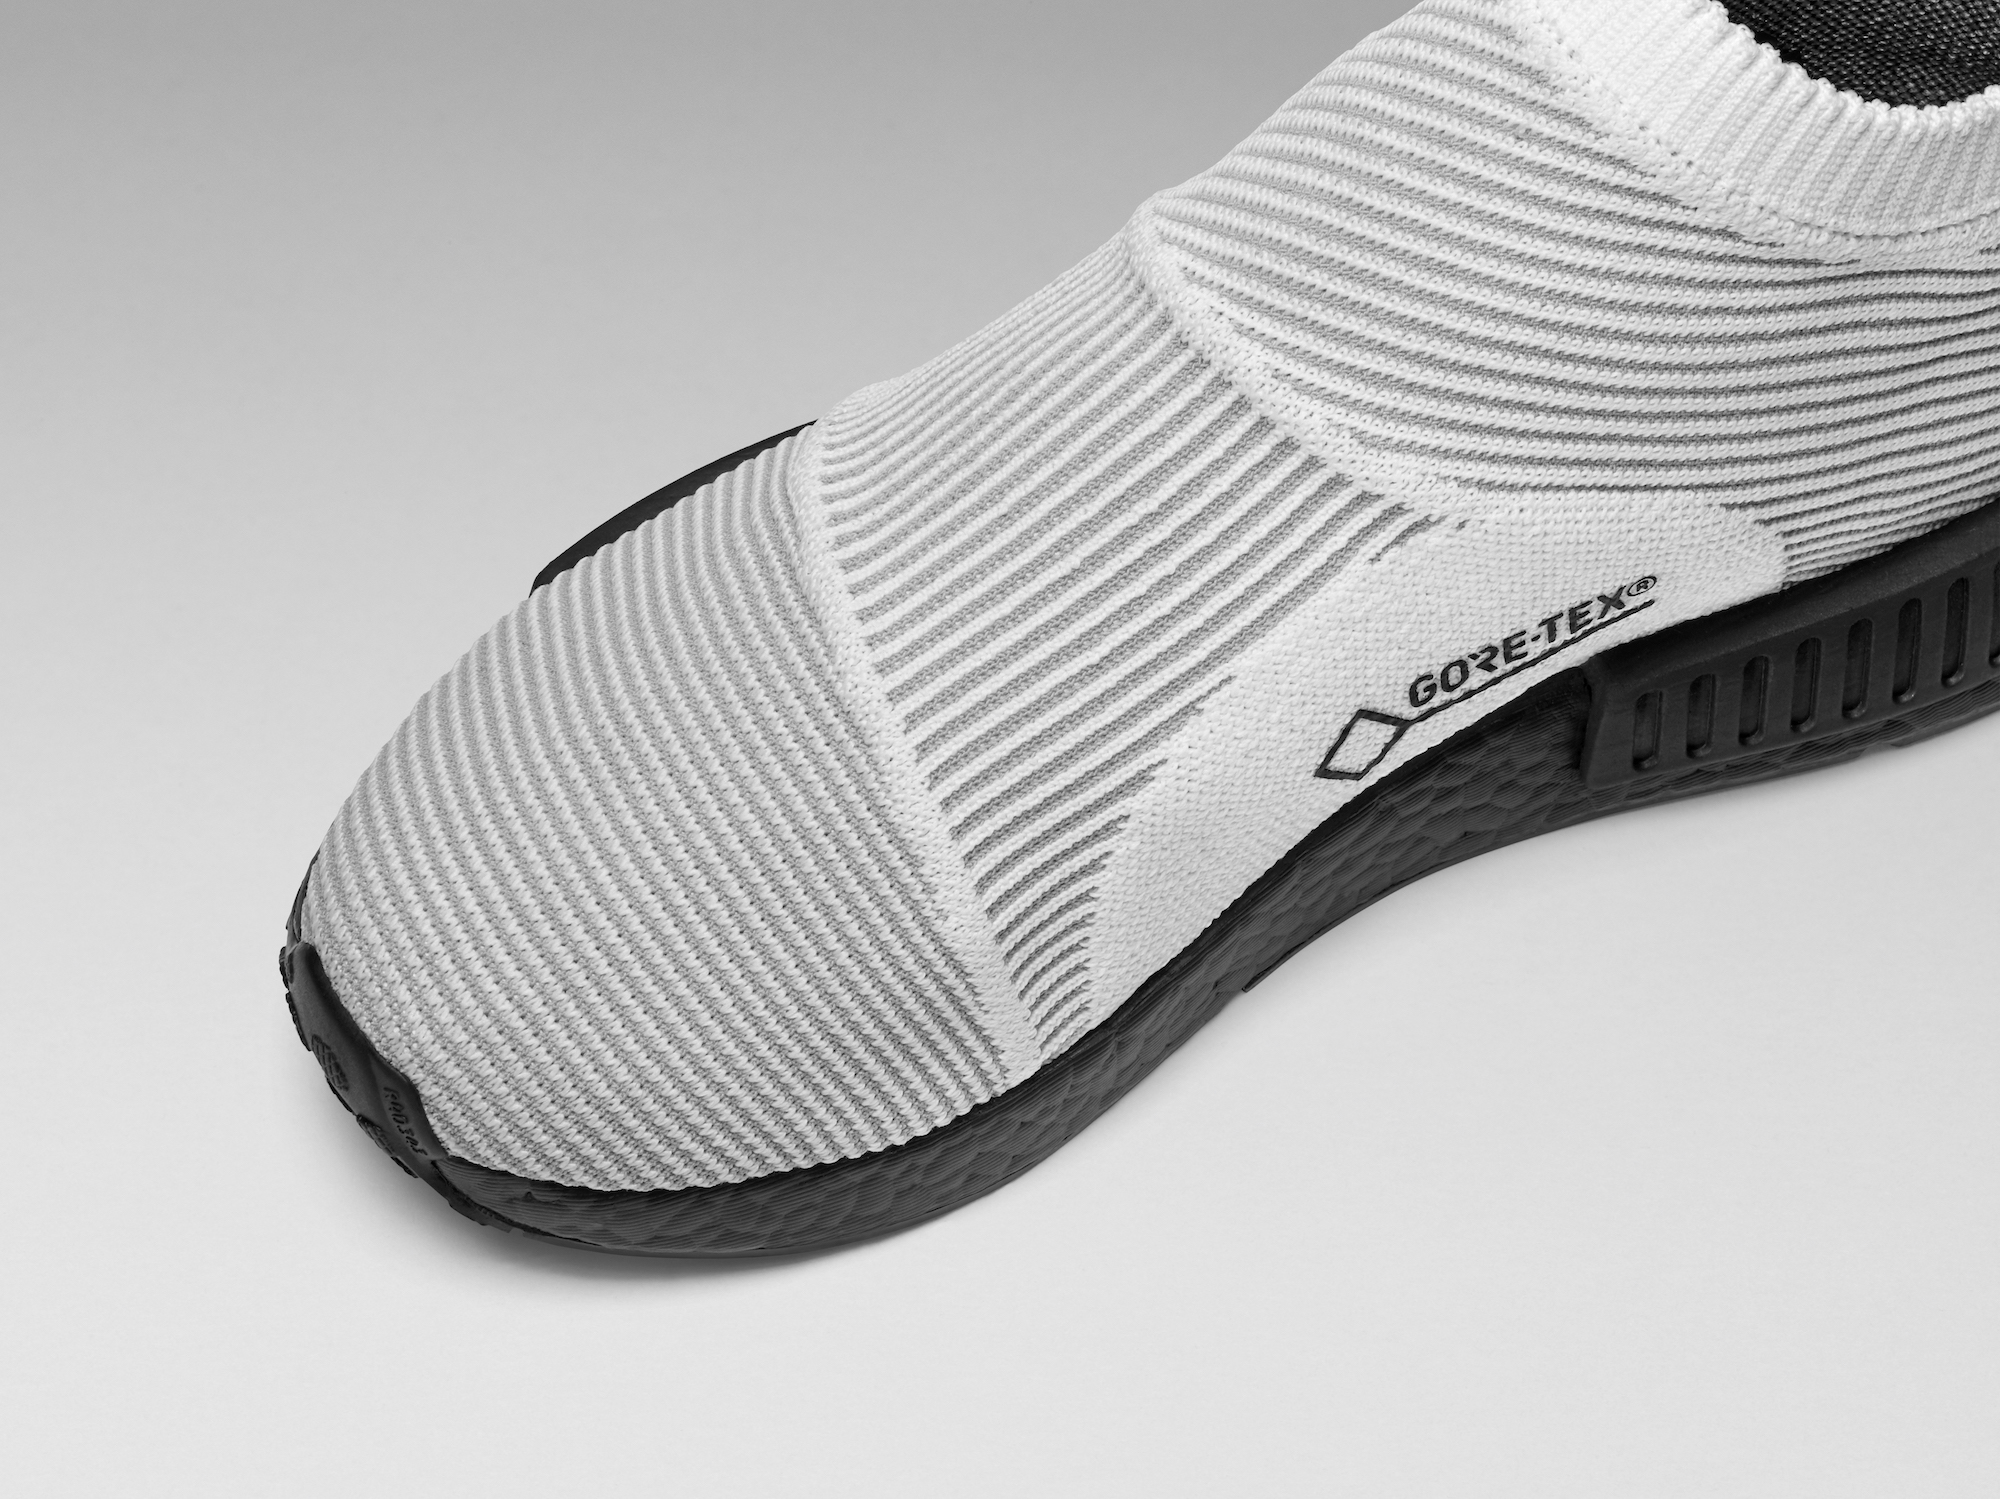 Accor instans Uartig The adidas NMD CS1 GORE-TEX Primeknit Finally Arrives Next Week -  WearTesters